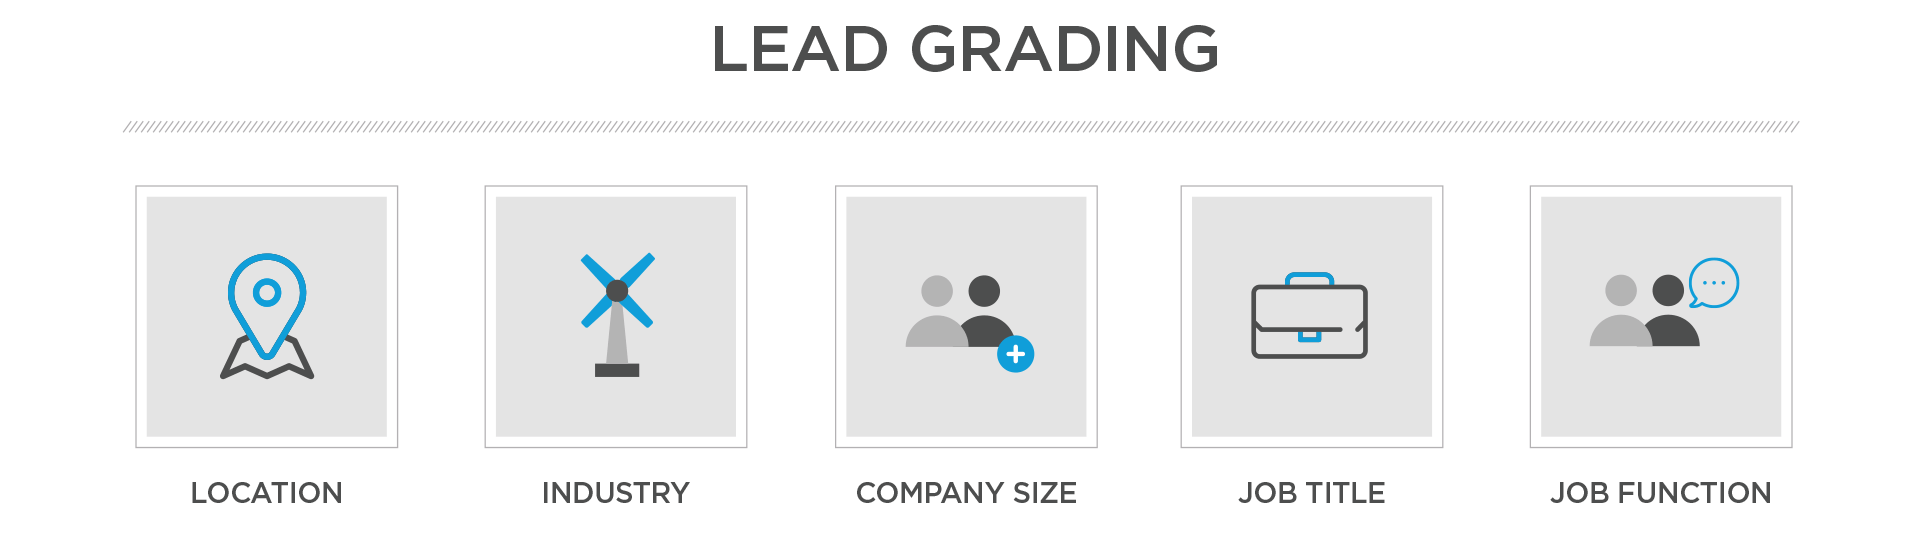 Lead grading in Sales Marketing Cloud Pardot 